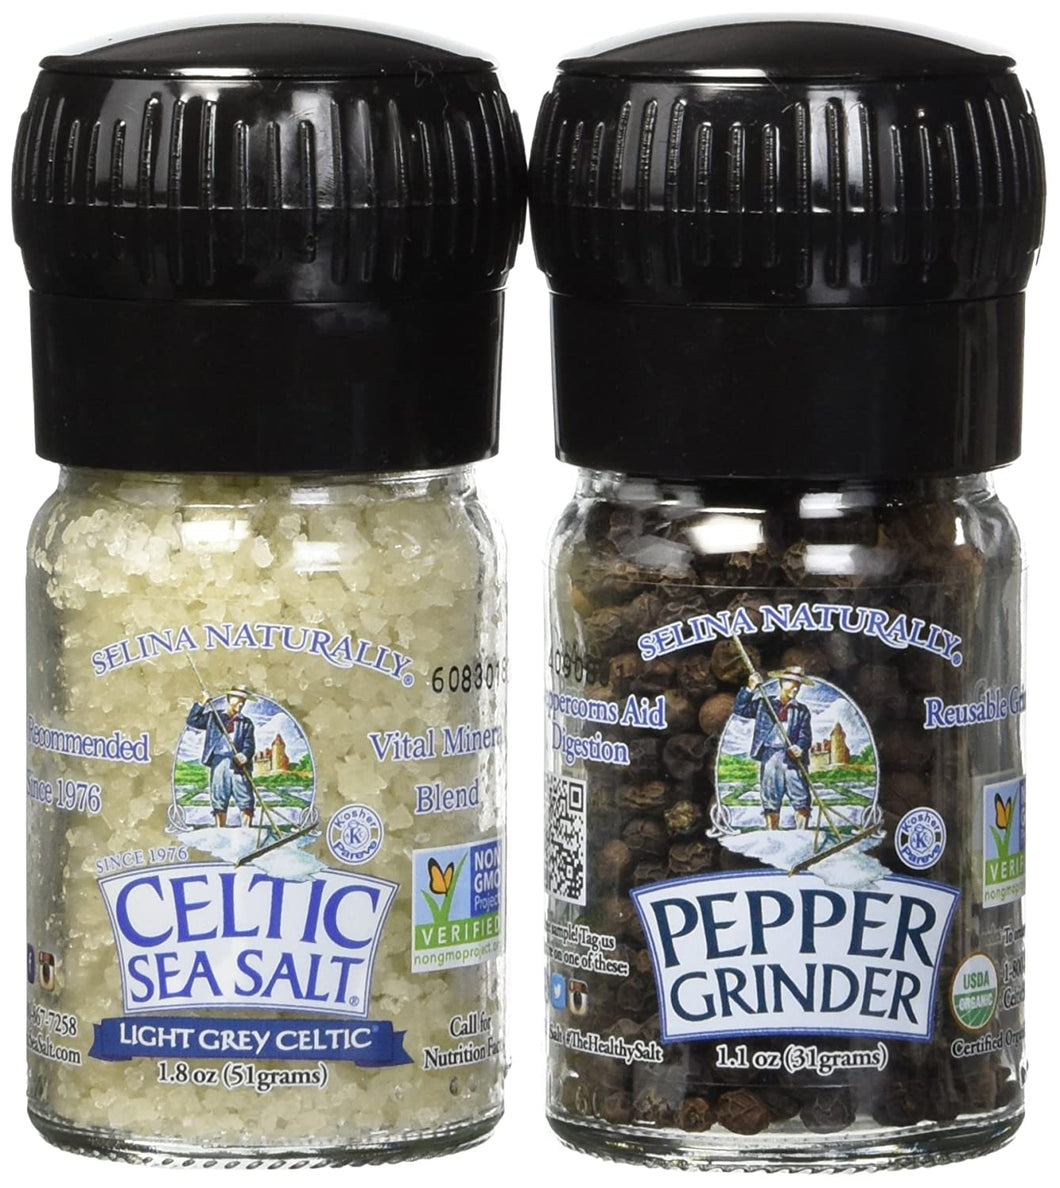 Celtic Sea Salt Organic Peppercorn and Light Grey Celtic Sea Salt Mini Grinders, 2.9 Ounces – Reusable, Refillable Glass Grinders with Additive-Free, Delicious Sea Salt and Peppercorn